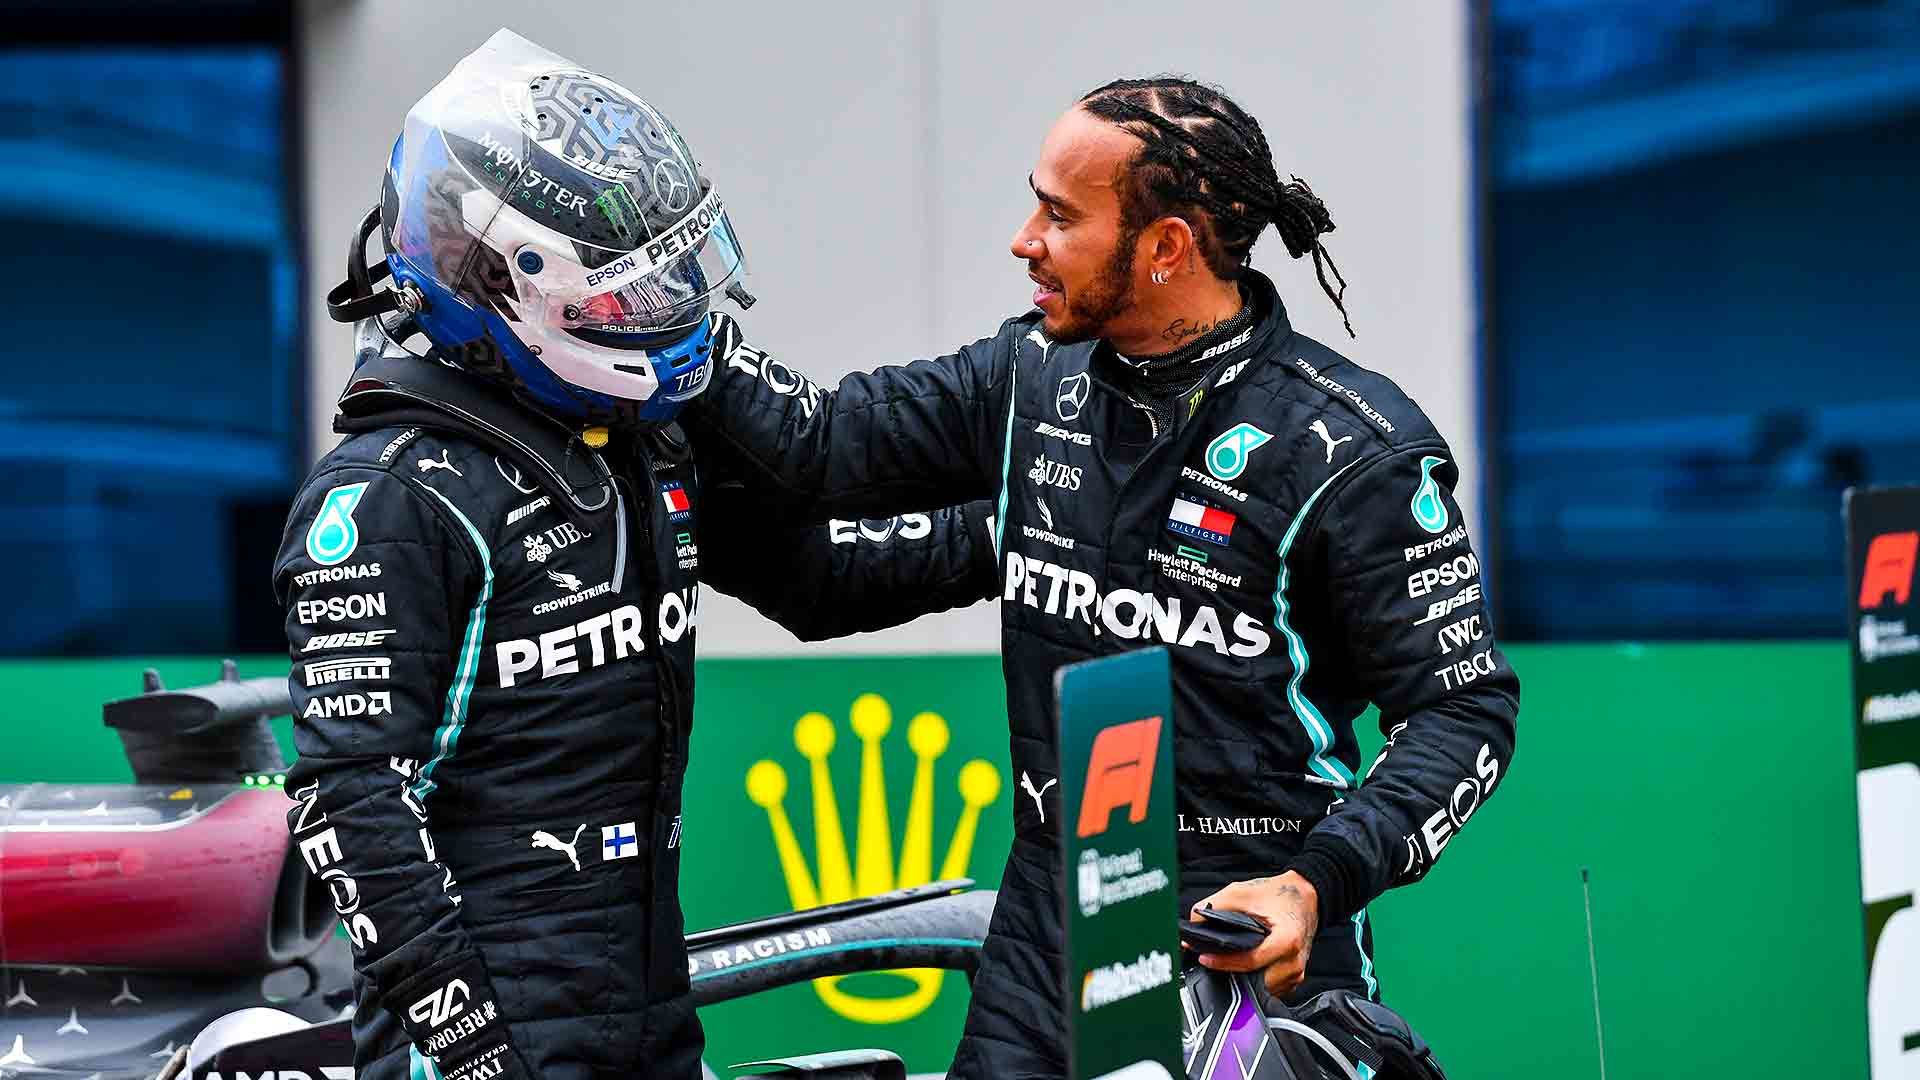 Lewis Hamilton with team-mate Valtterie Bottas